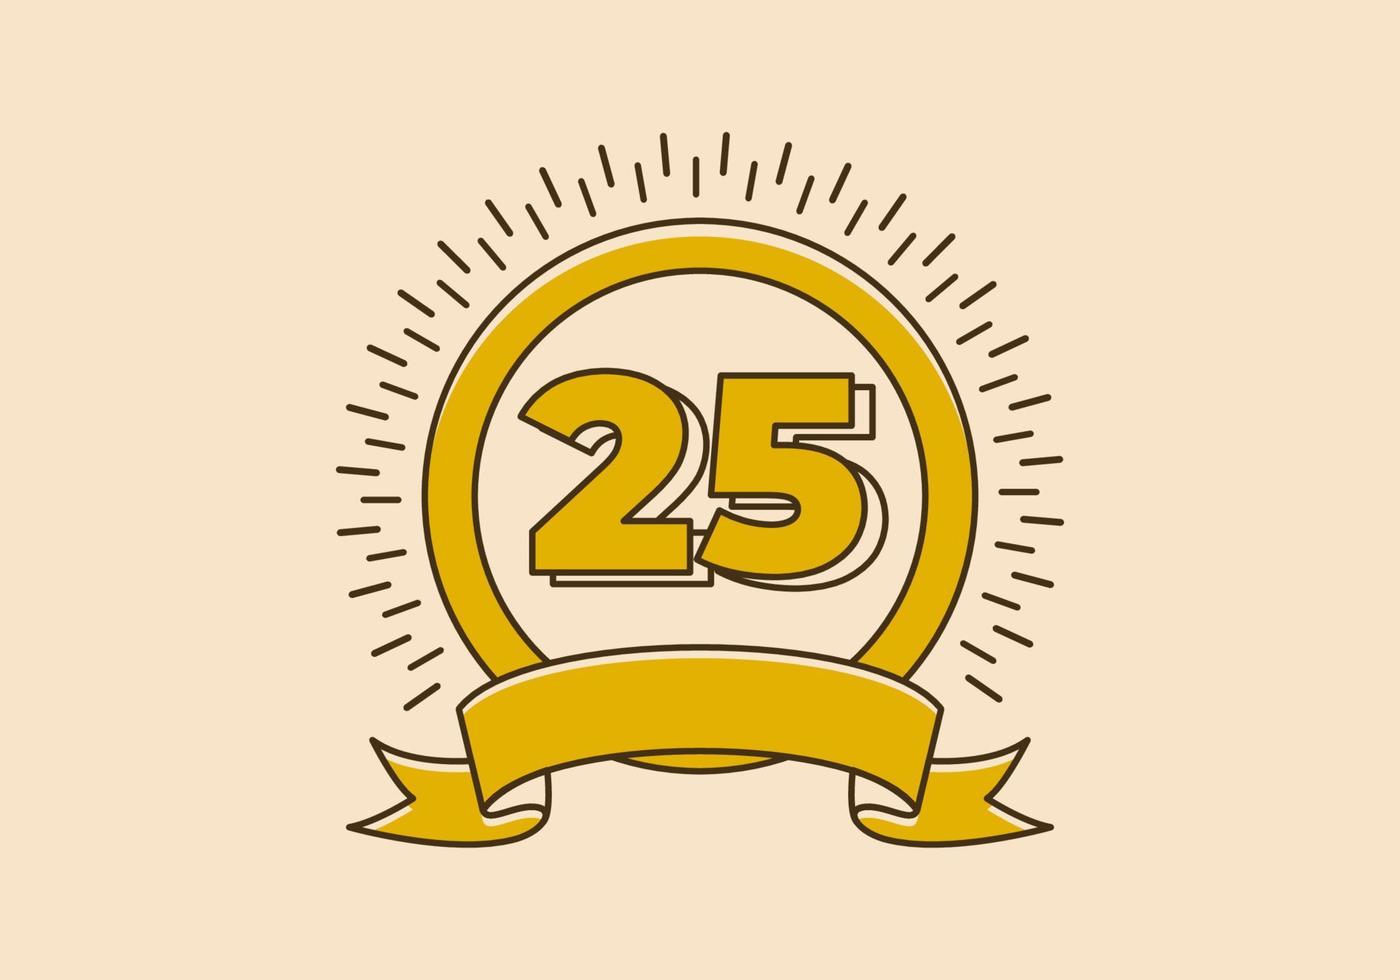 distintivo de círculo amarelo vintage com o número 25 nele vetor